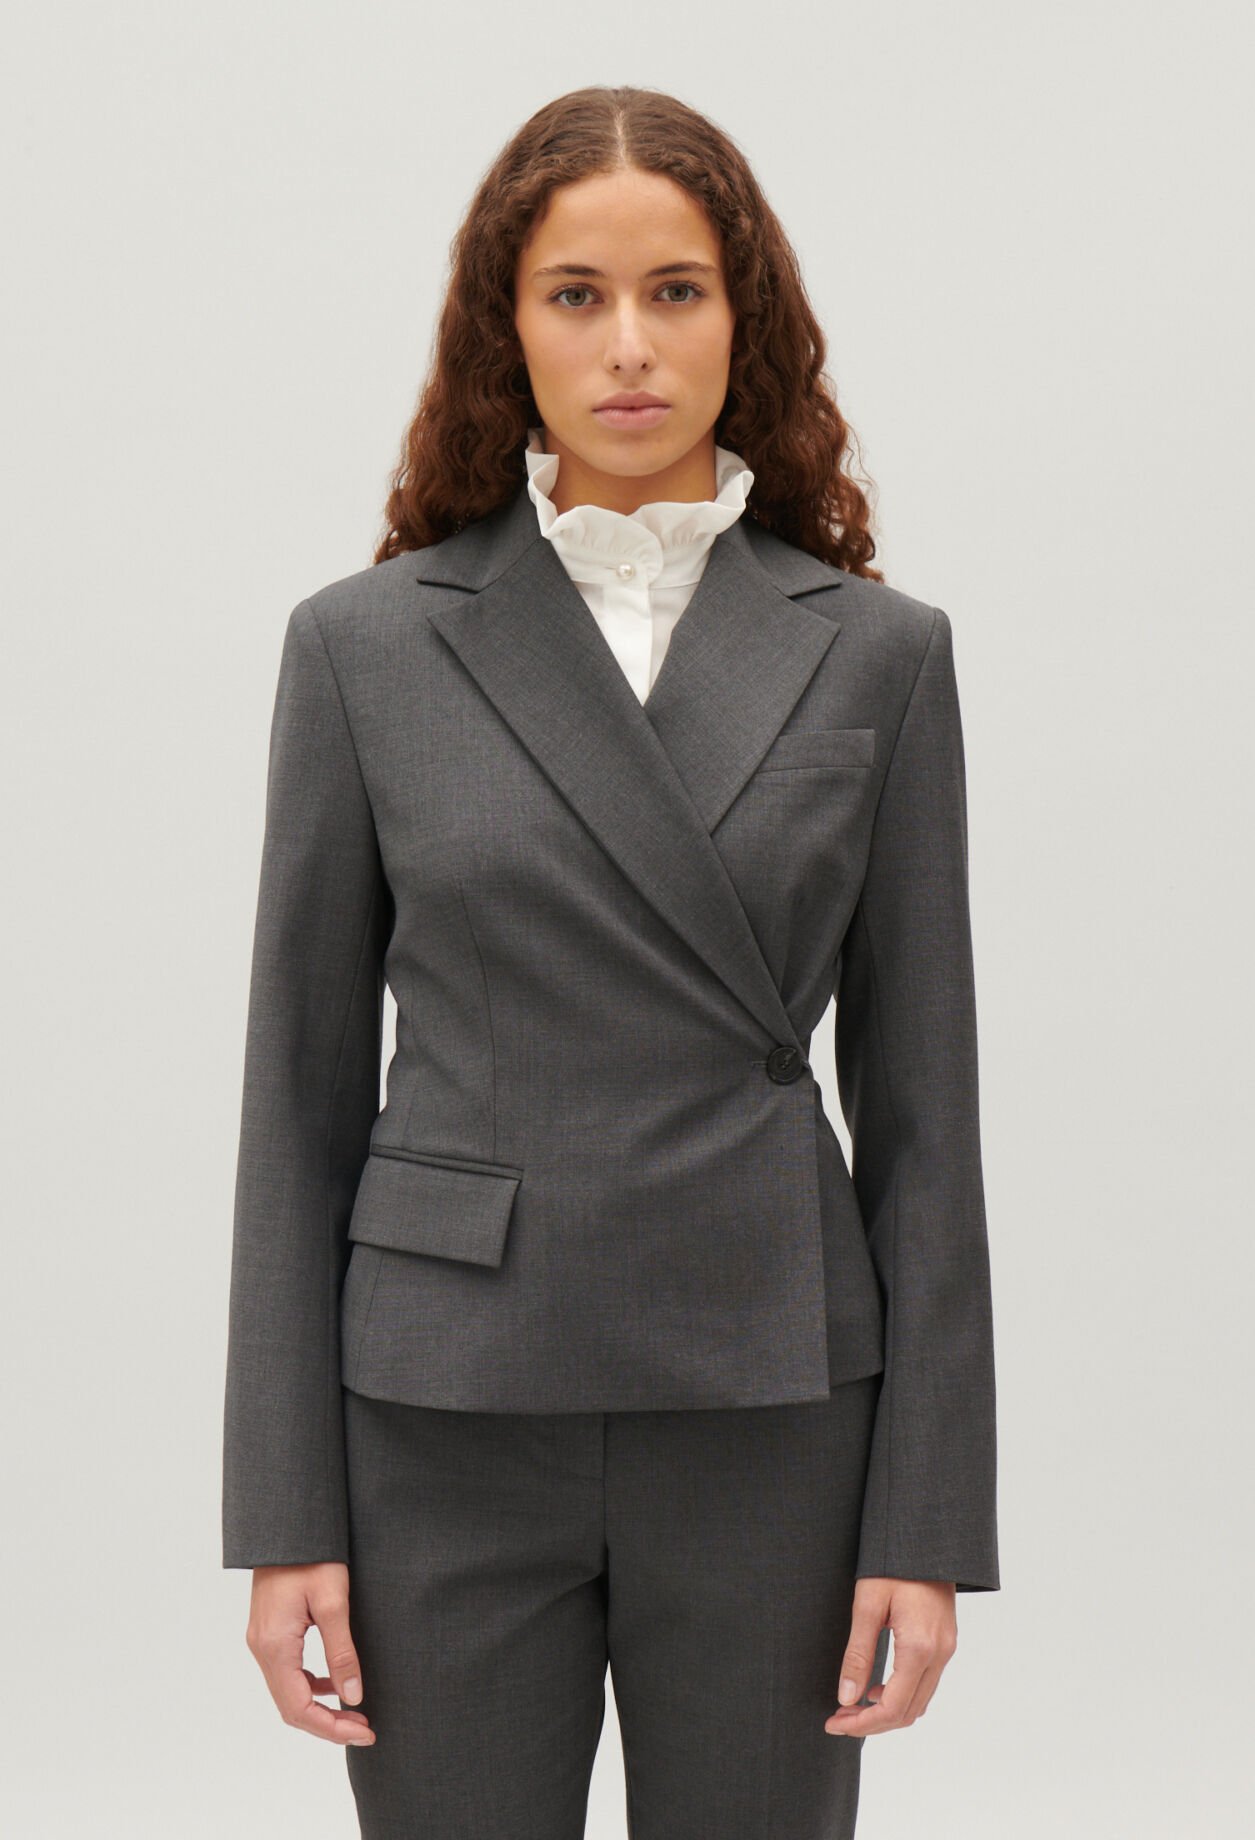 Flecked grey wrapover suit jacket